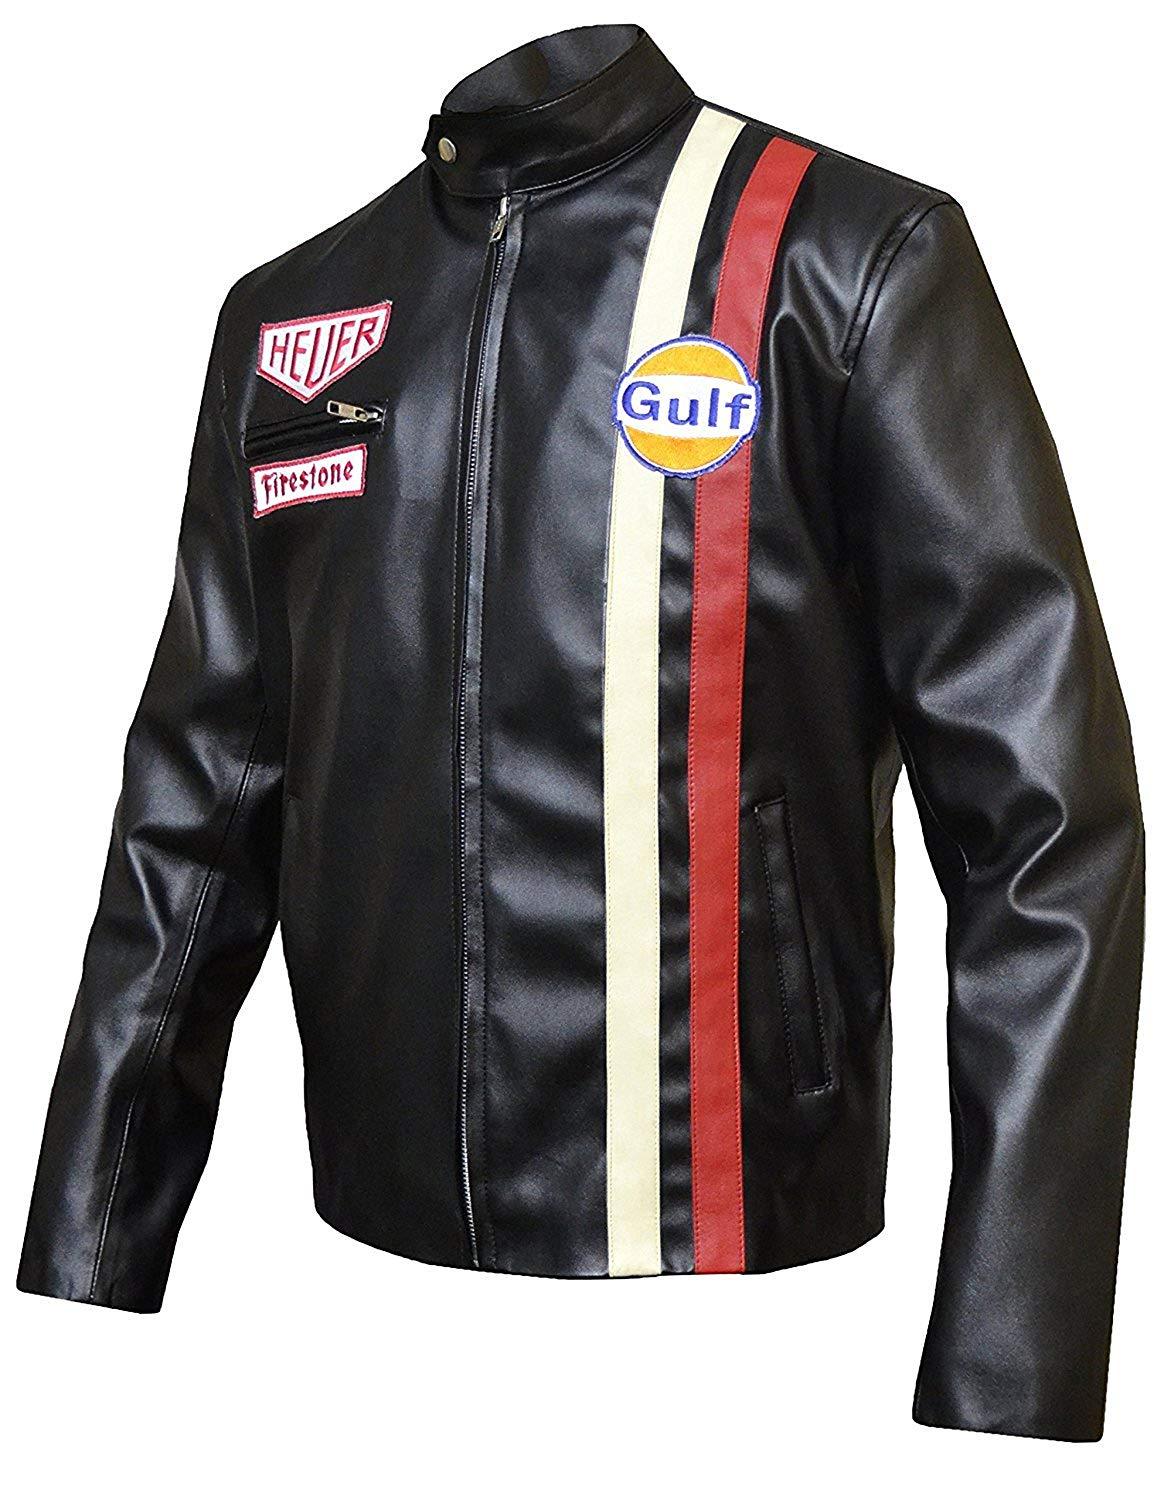 Steve Mens Gulf Le Biker Mans MC Synthetic Leather Queen Jacket - Coats ...